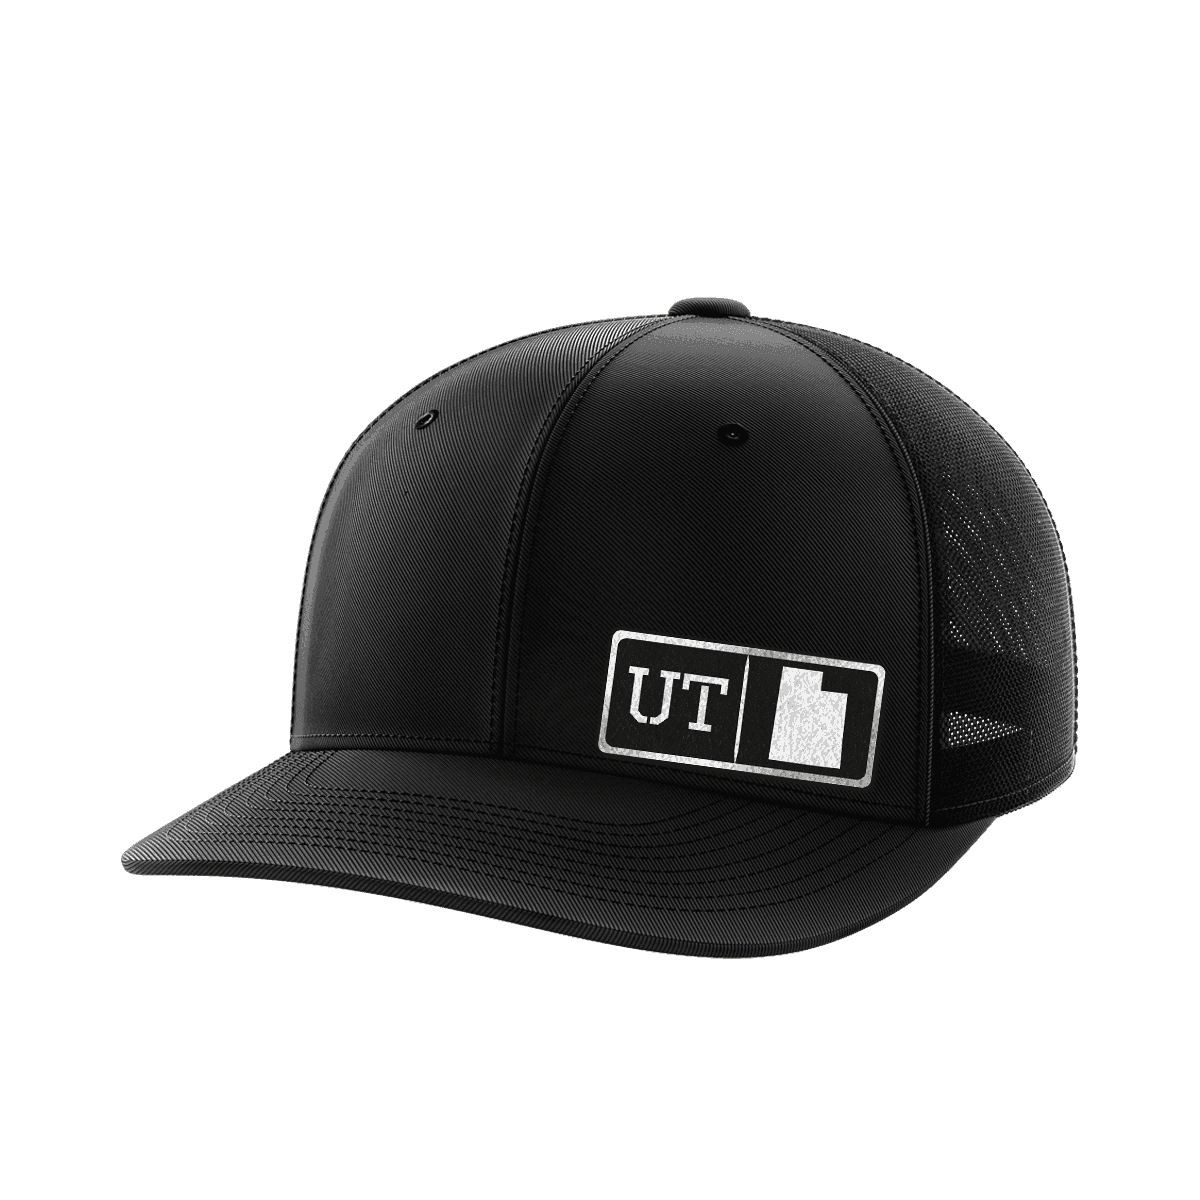 Utah Homegrown Hats - Greater Half